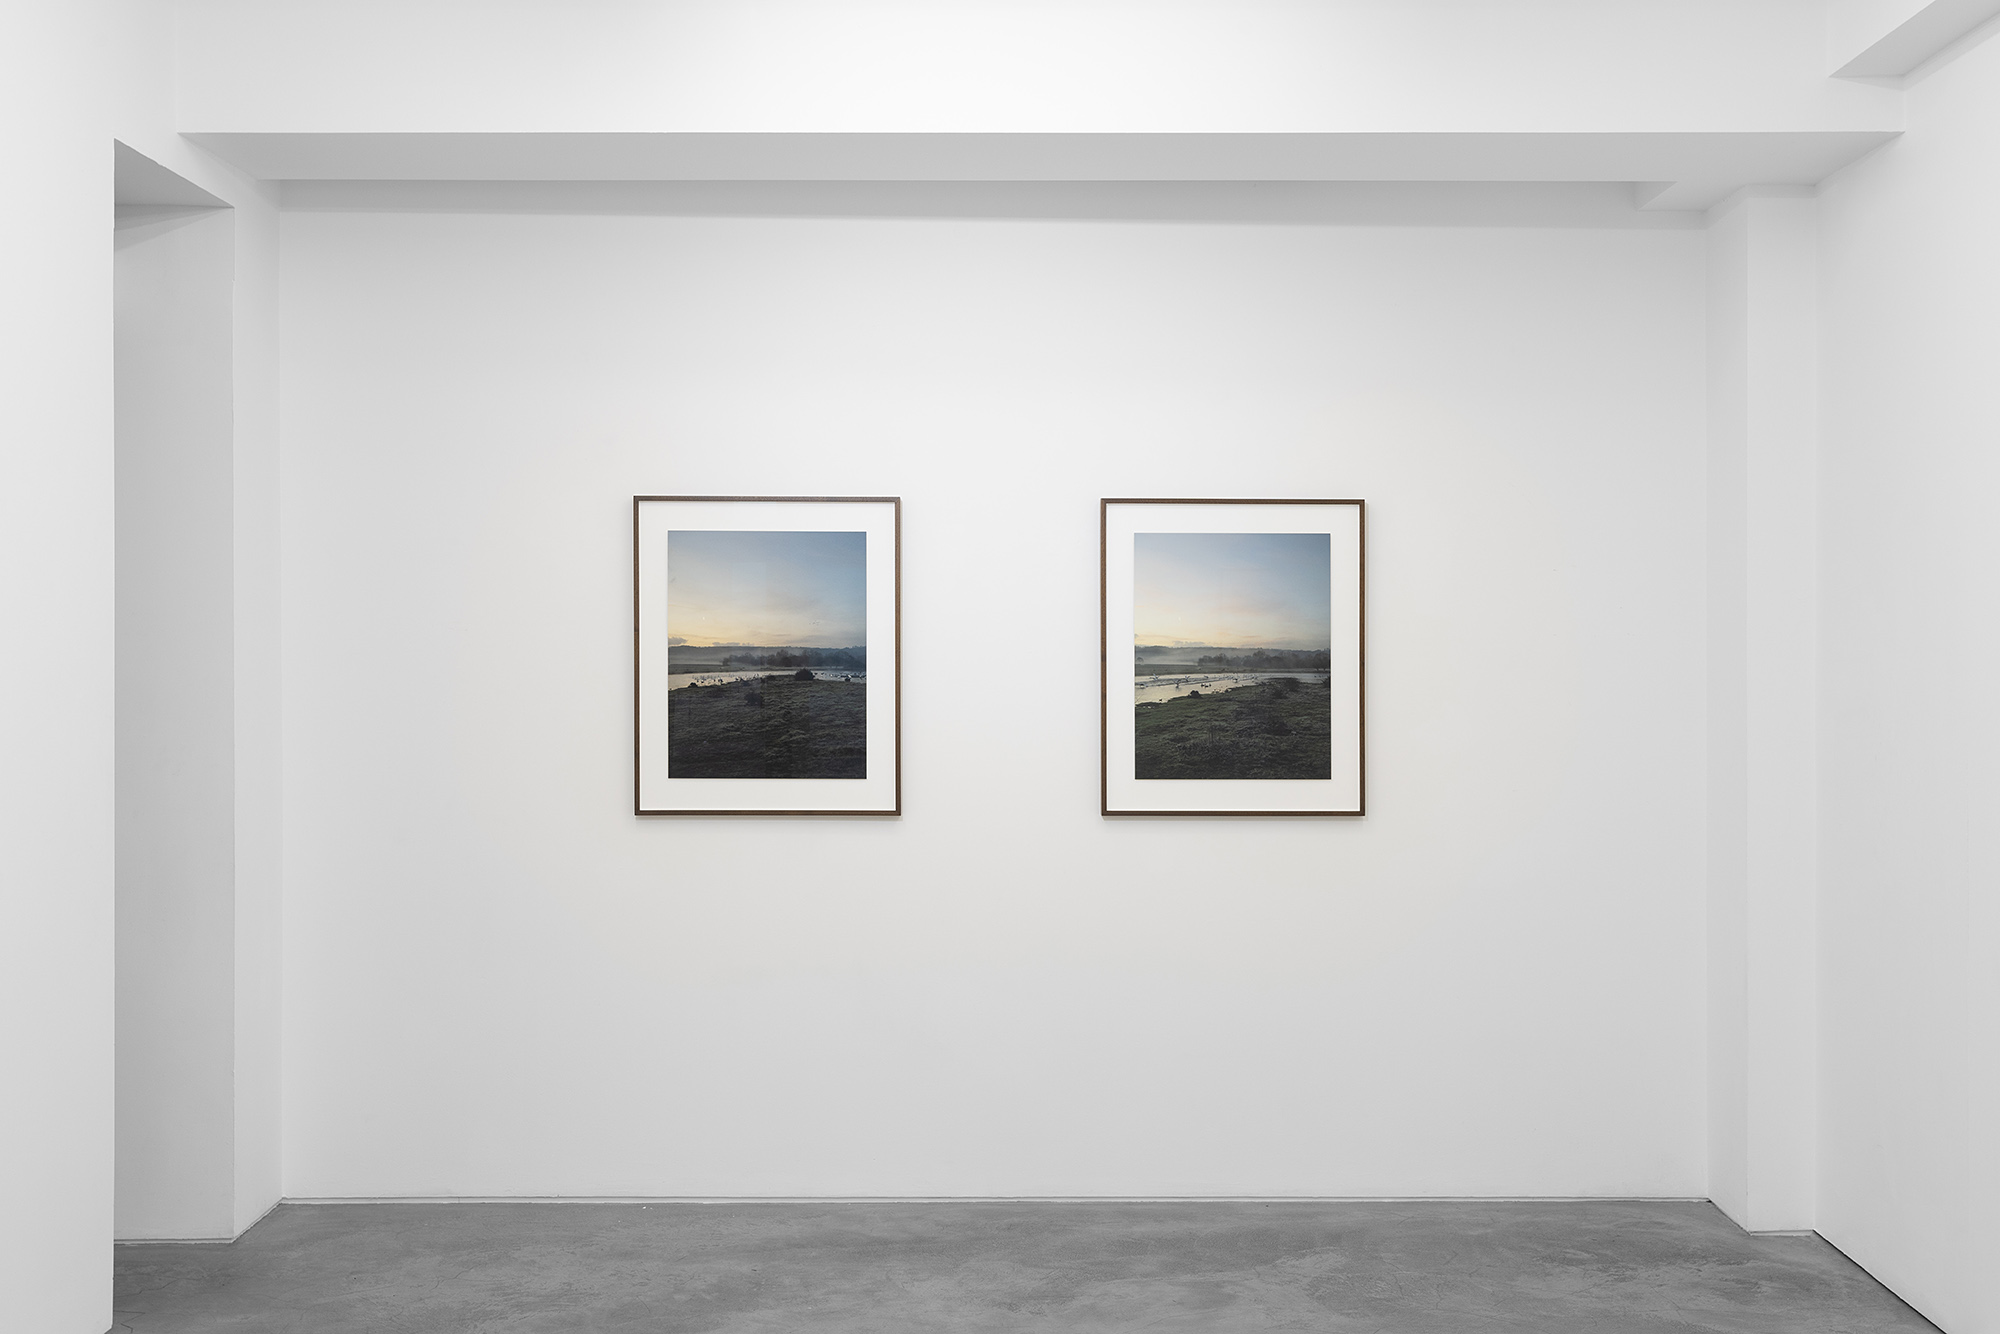 Jem Southam: The Seventh Winter. Huxley-Parlour Gallery, 3–5 Swallow St, W1B 4DE